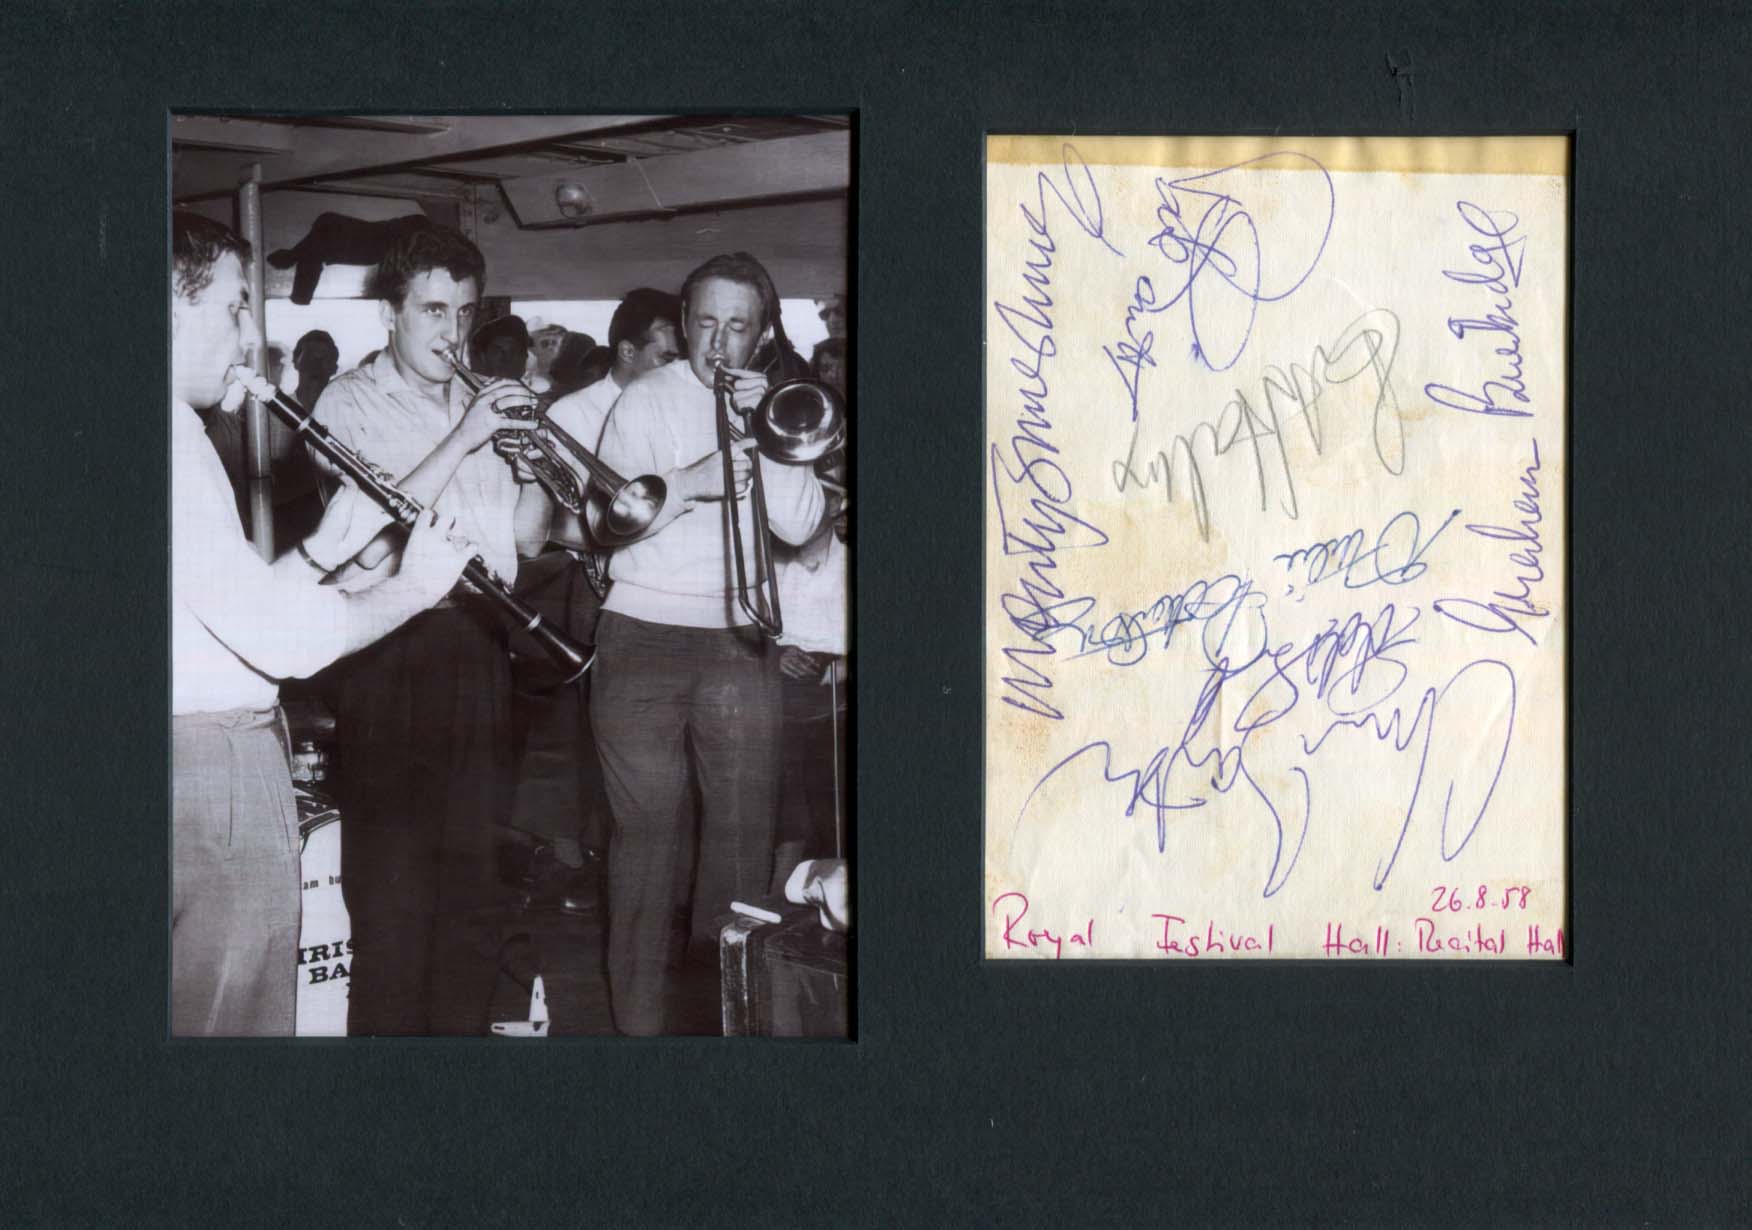  Chris Barber`s Jazz Band Autograph Autogramm | ID 7989517746325